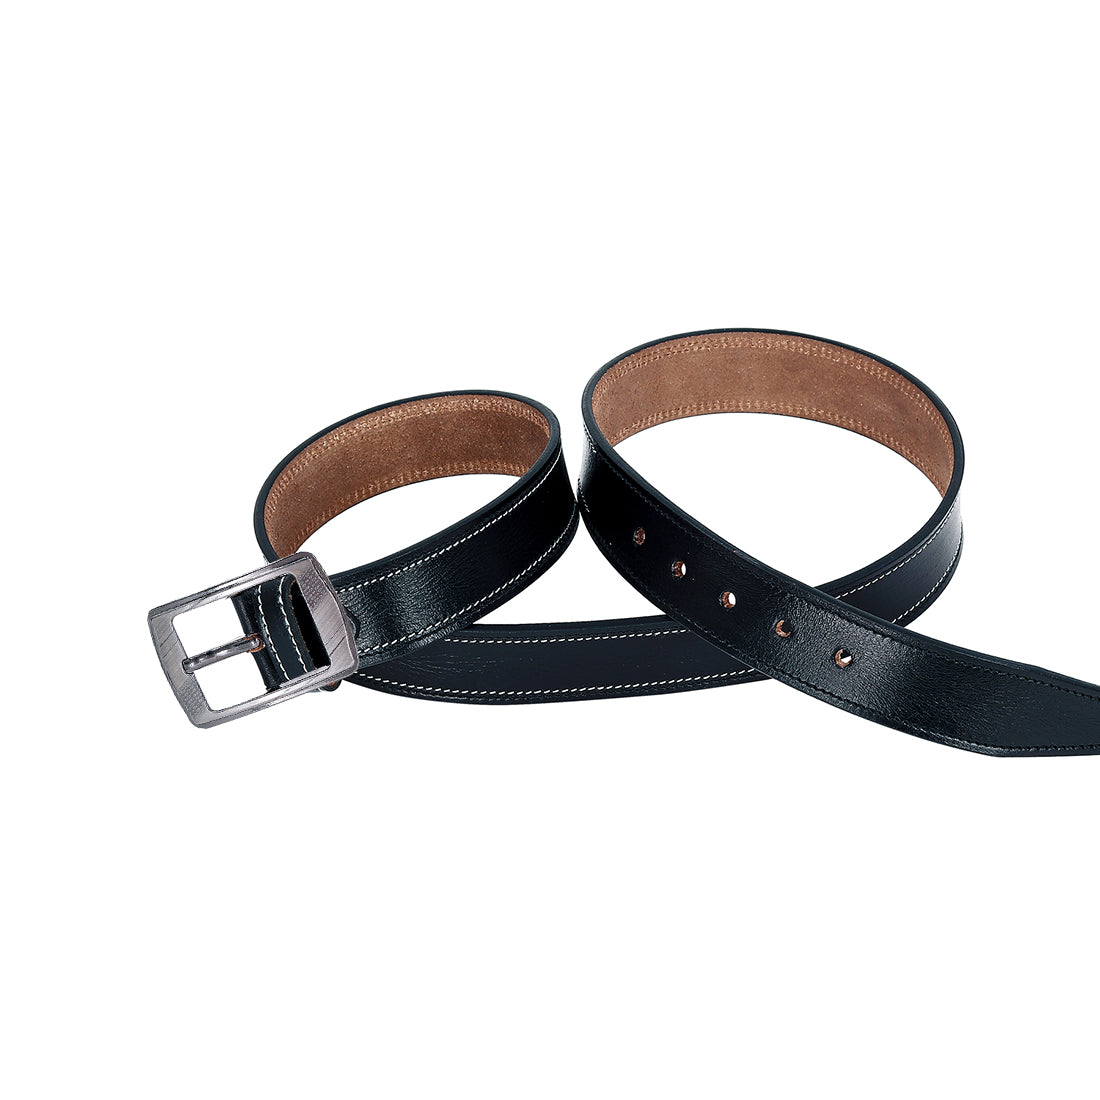 Leather World Pin Lock Buckle Genuine Leather Formal Casual Black Belt For Men Elegant Gift Box